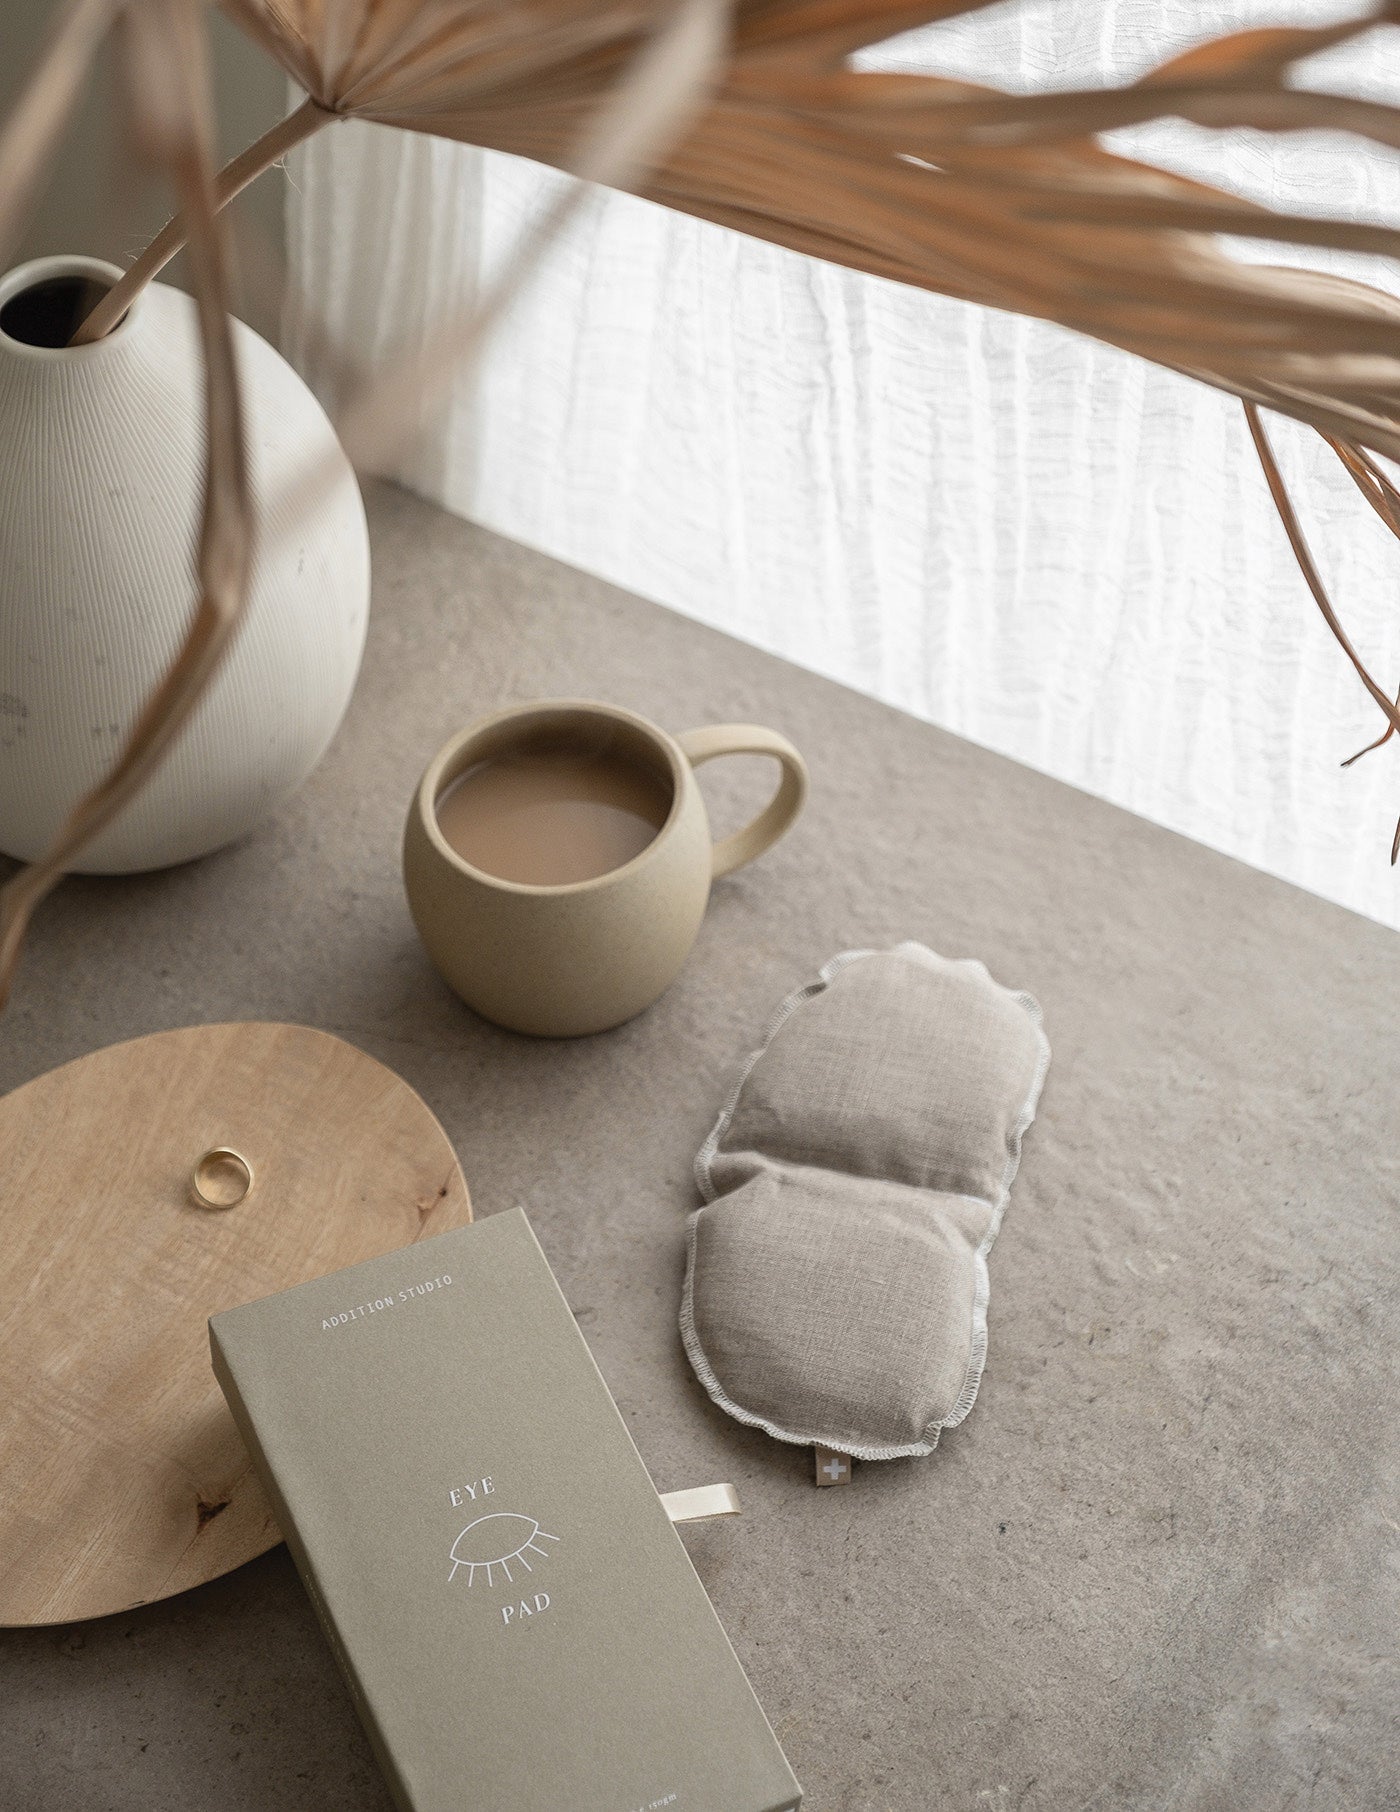 reusable eye pads for relaxation - meditation eye pillows - addition studio eye pad - australian eye pad